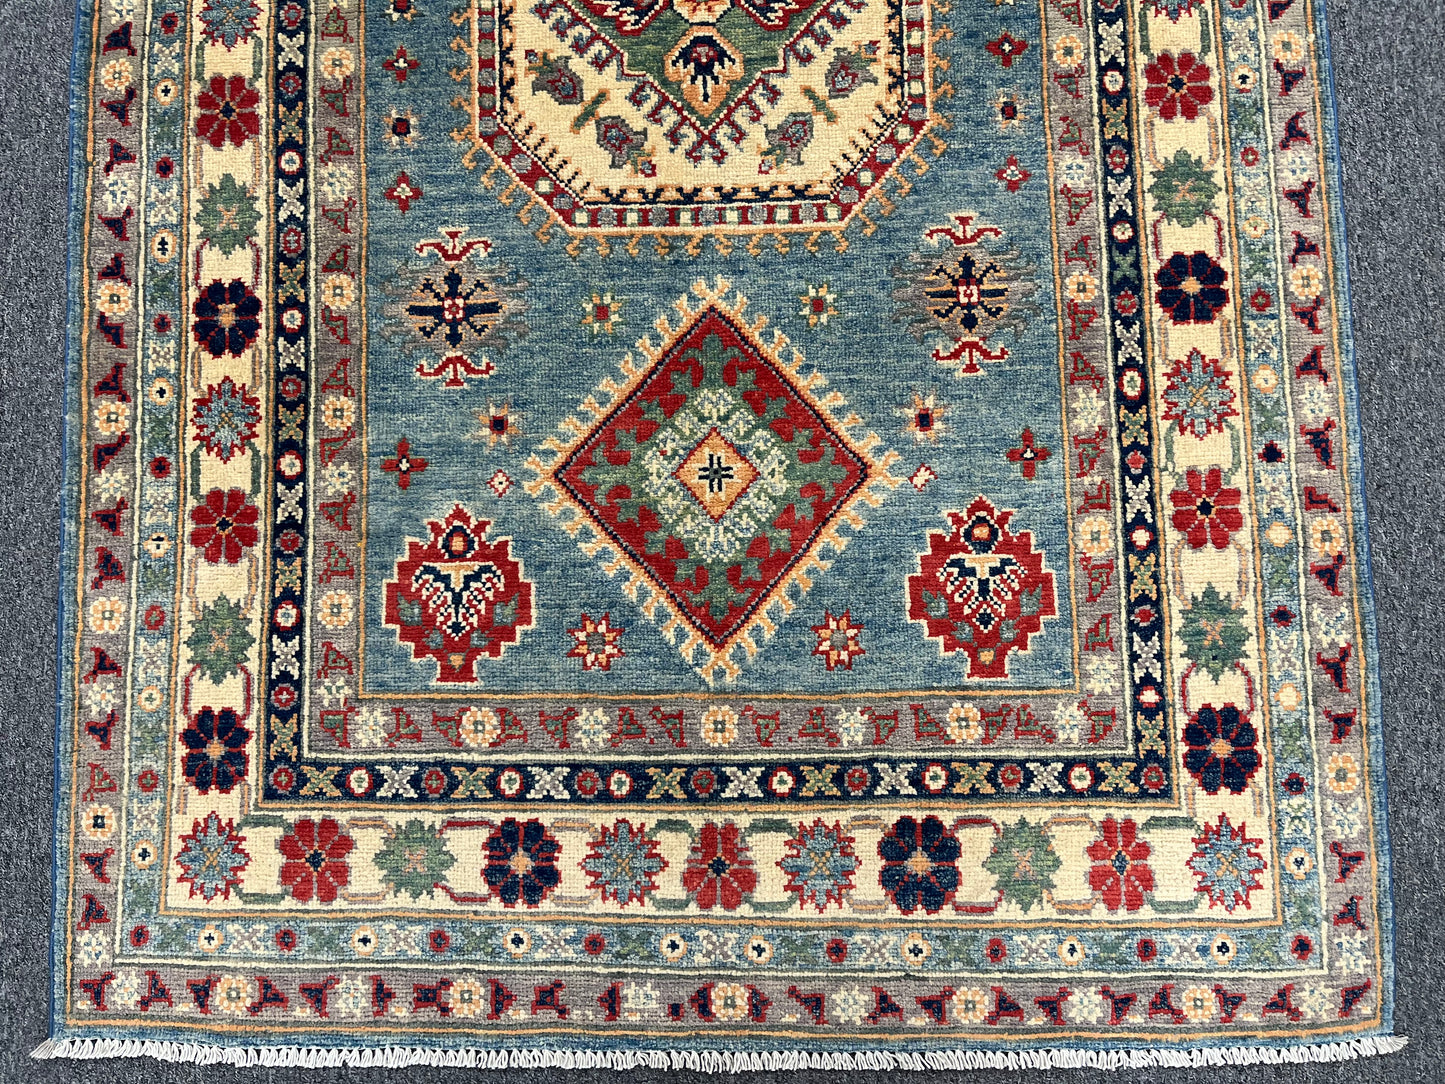 Kazak Light Blue 4X6 Handmade Wool Rug # 13760